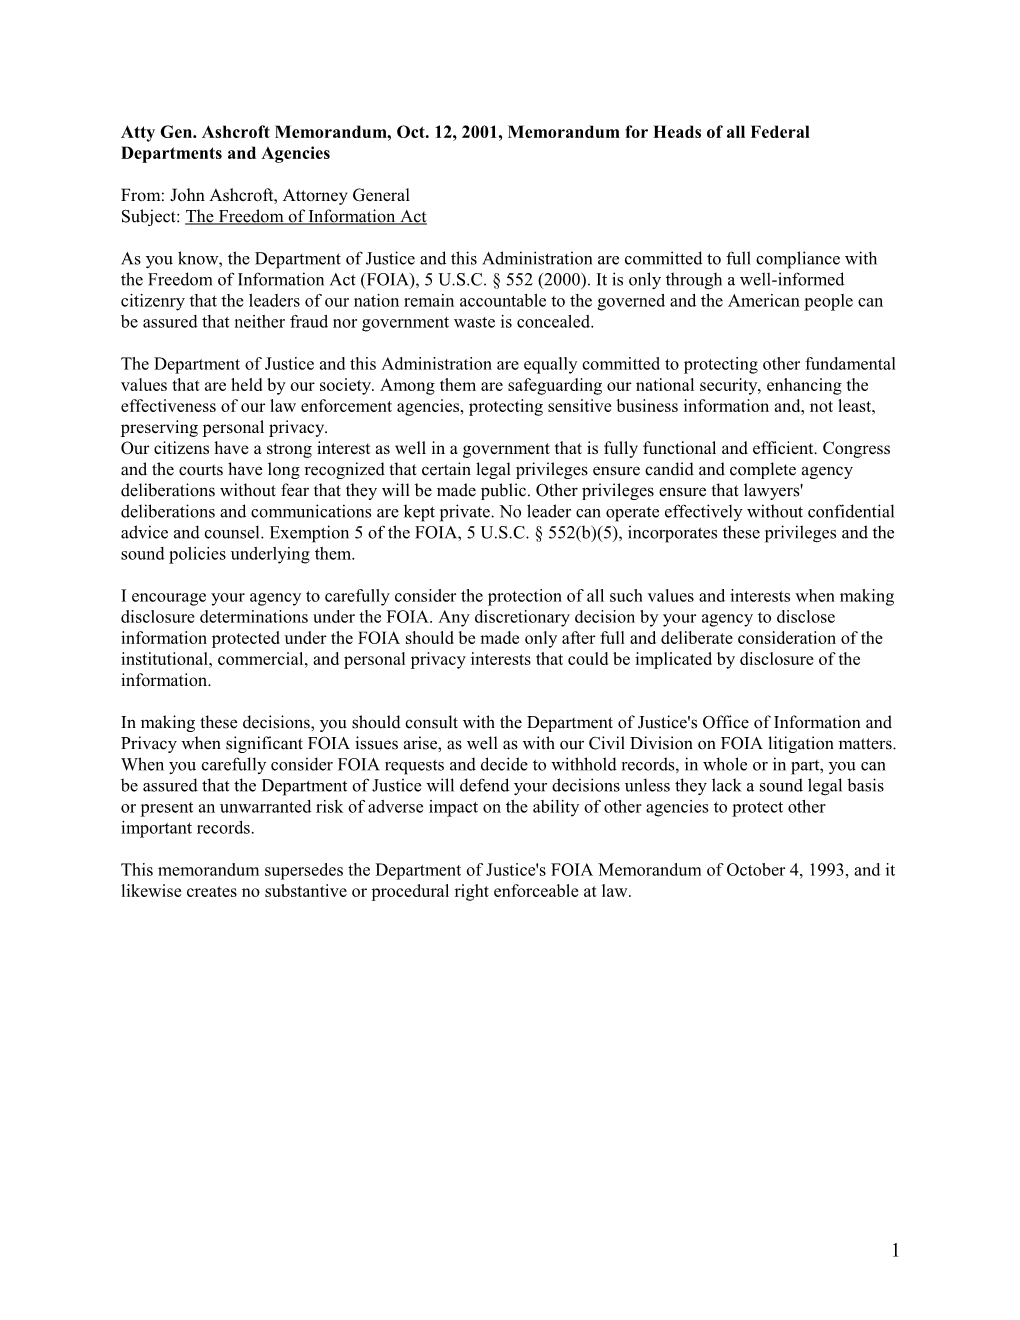 Memorandum for Heads of All Federal Departments and Agencies